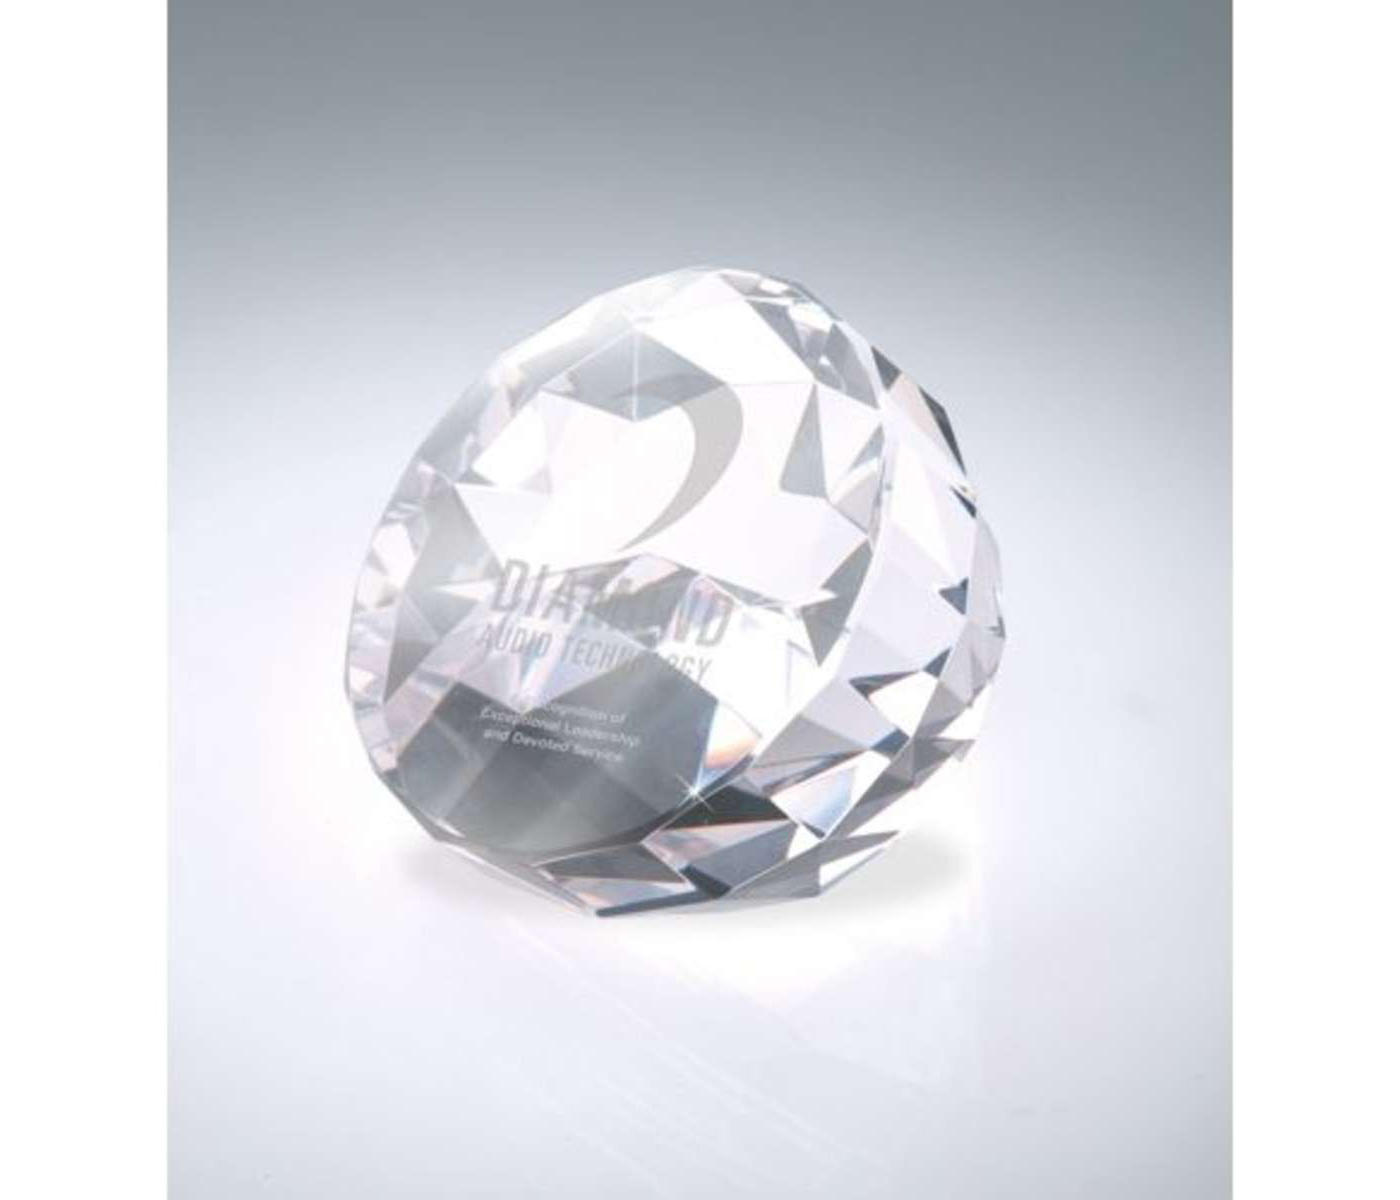 Modica Flat Cut Diamond - Clear